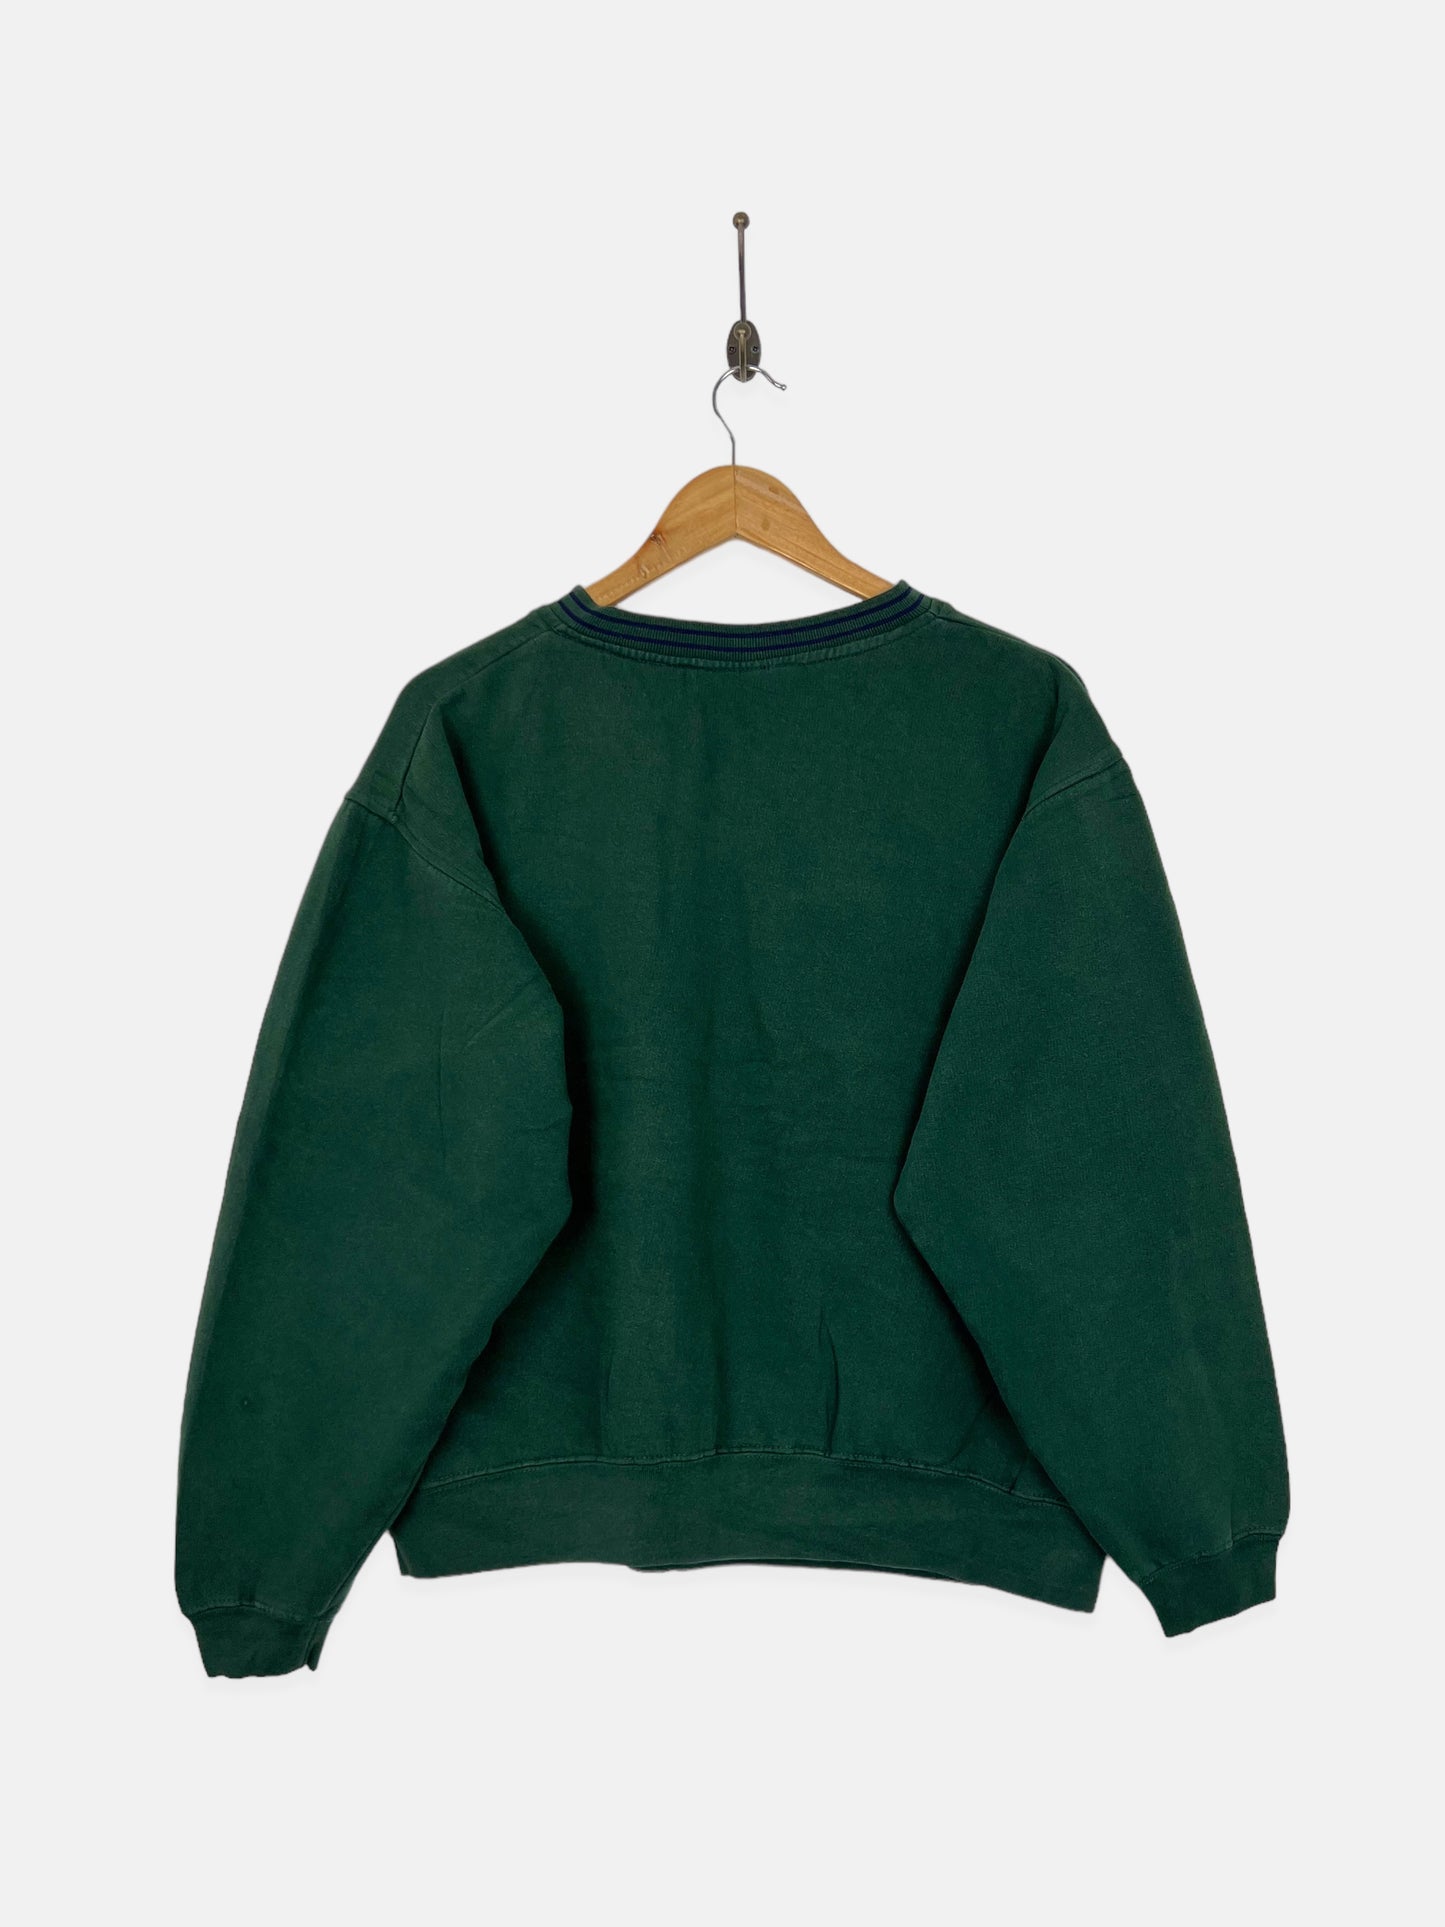 90's M&M's Embroidered Vintage Sweatshirt Size 12-14